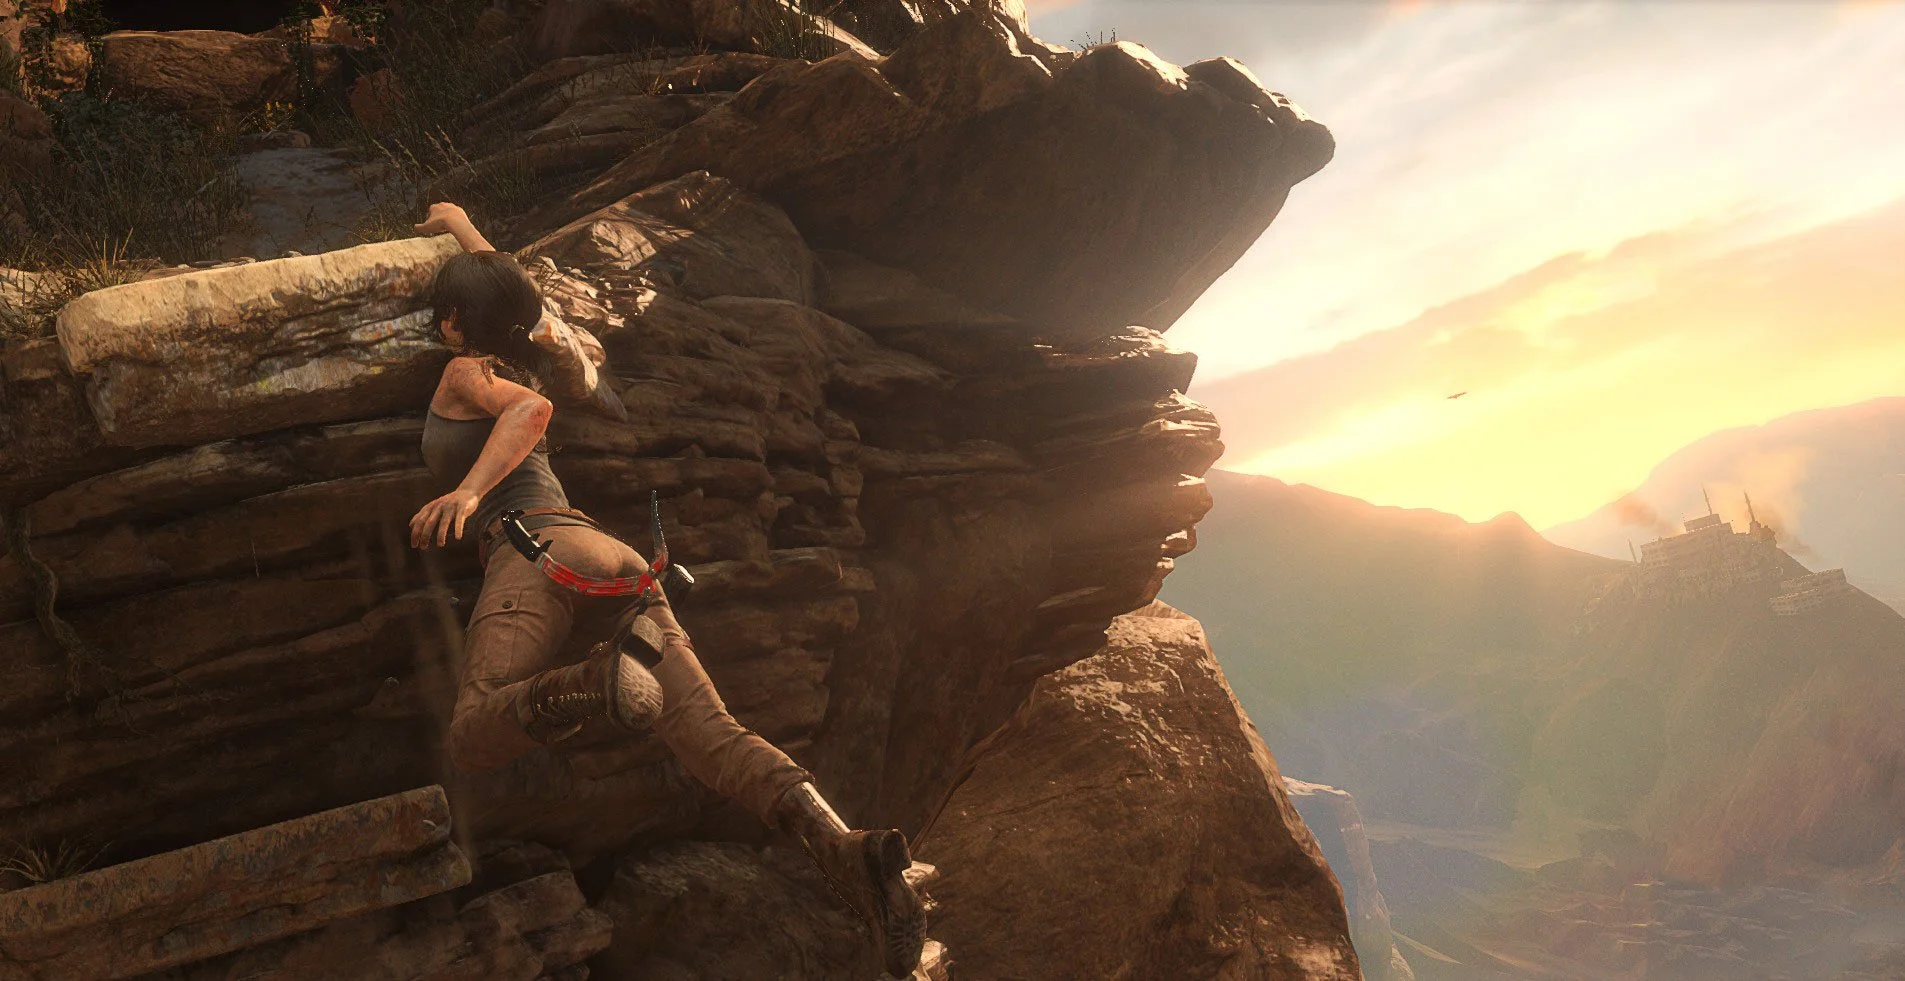 В Rise of the Tomb Raider нет мультиплеера, но есть онлайн-функционал - фото 1